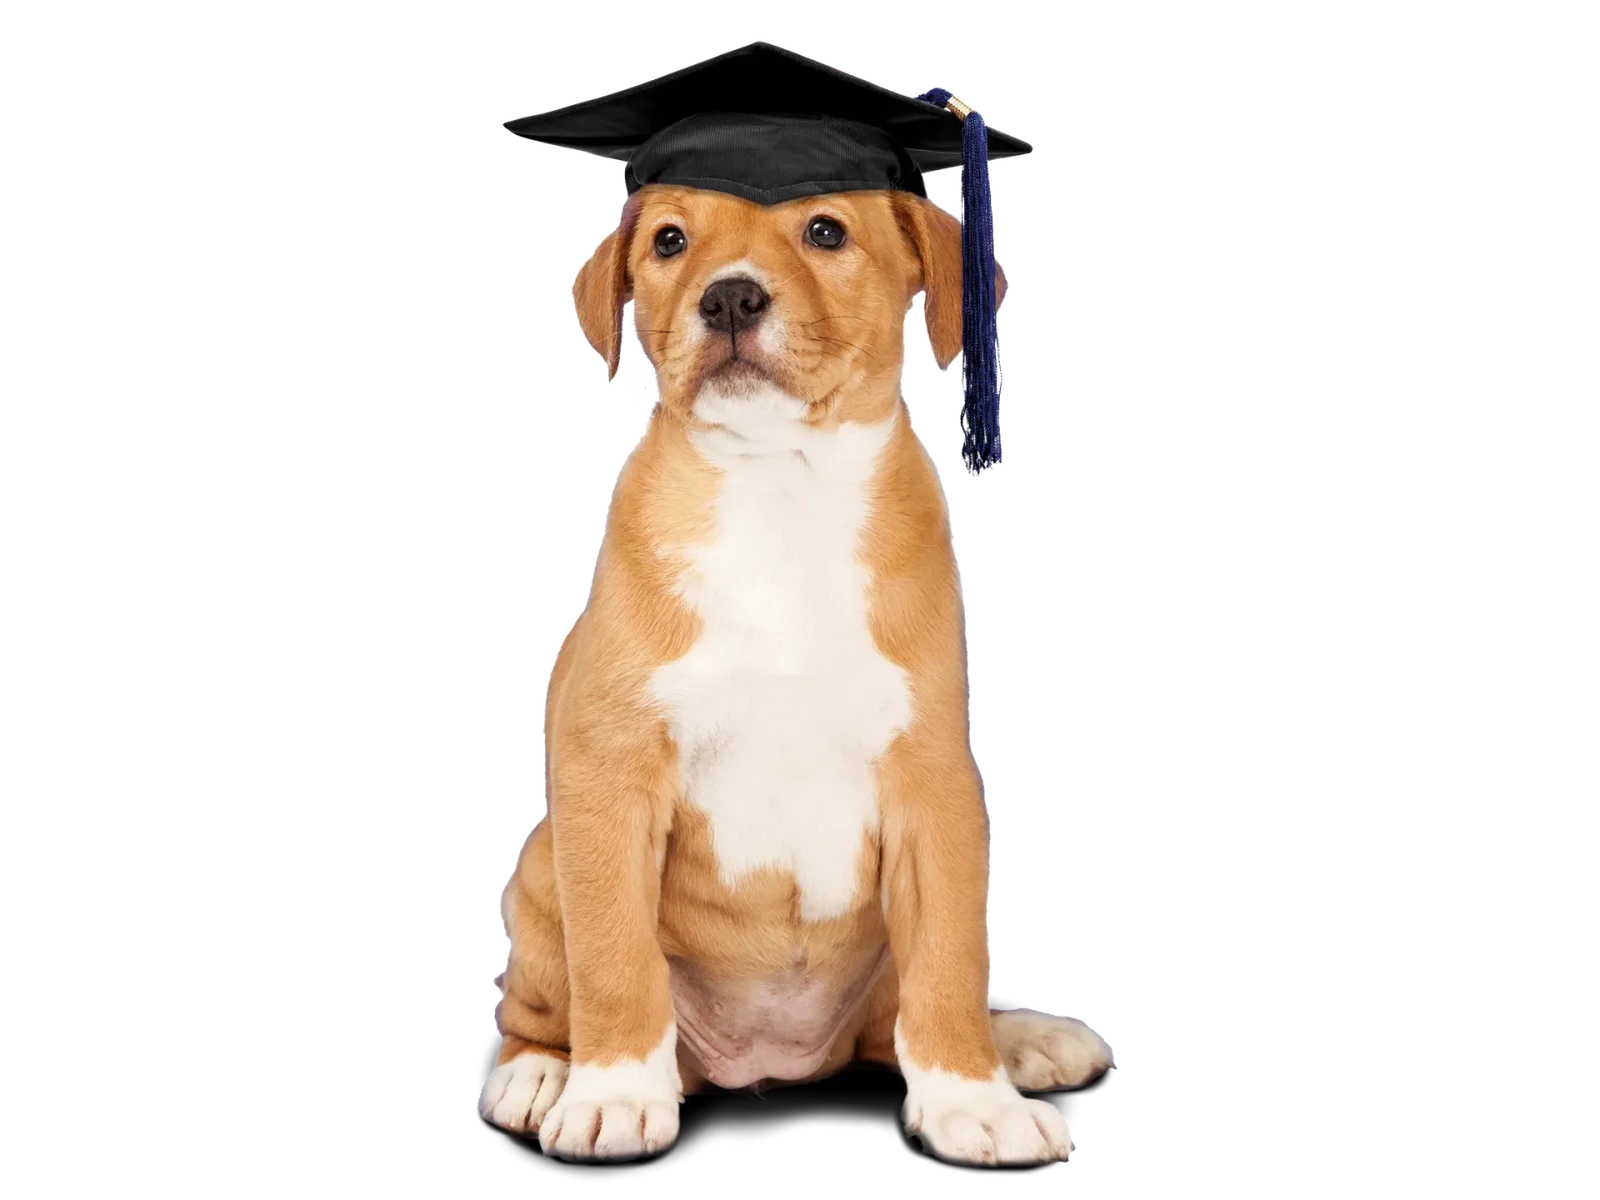 Puppy with graduation cap.